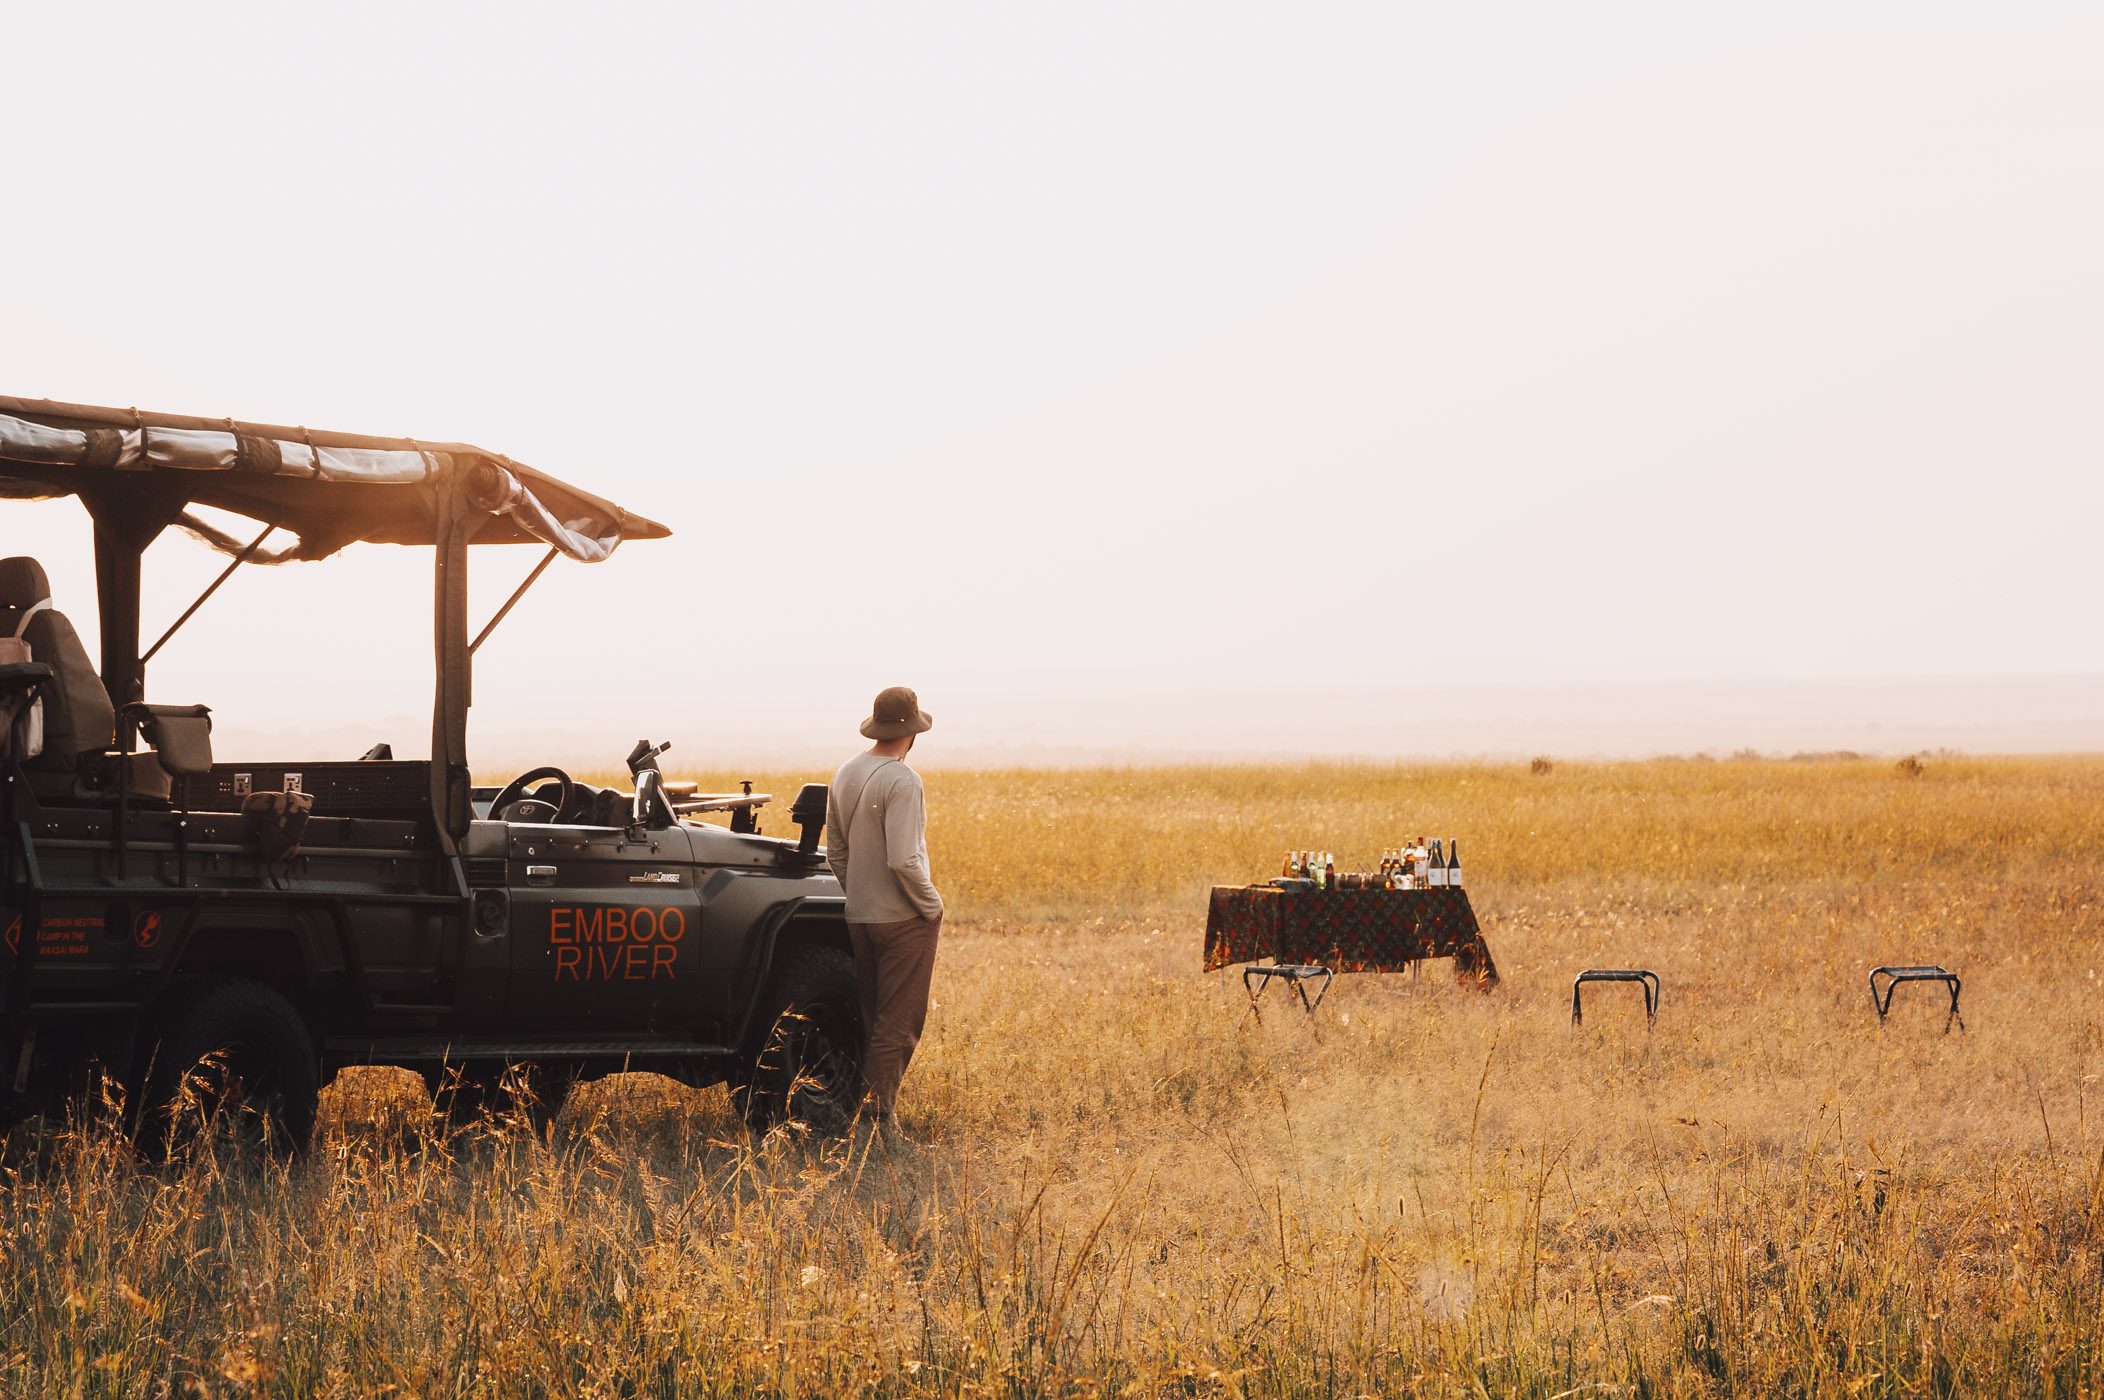 Eco luxury safari in Kenya's Maasai Mara with Emboo River Camp and their electric safari vehicles